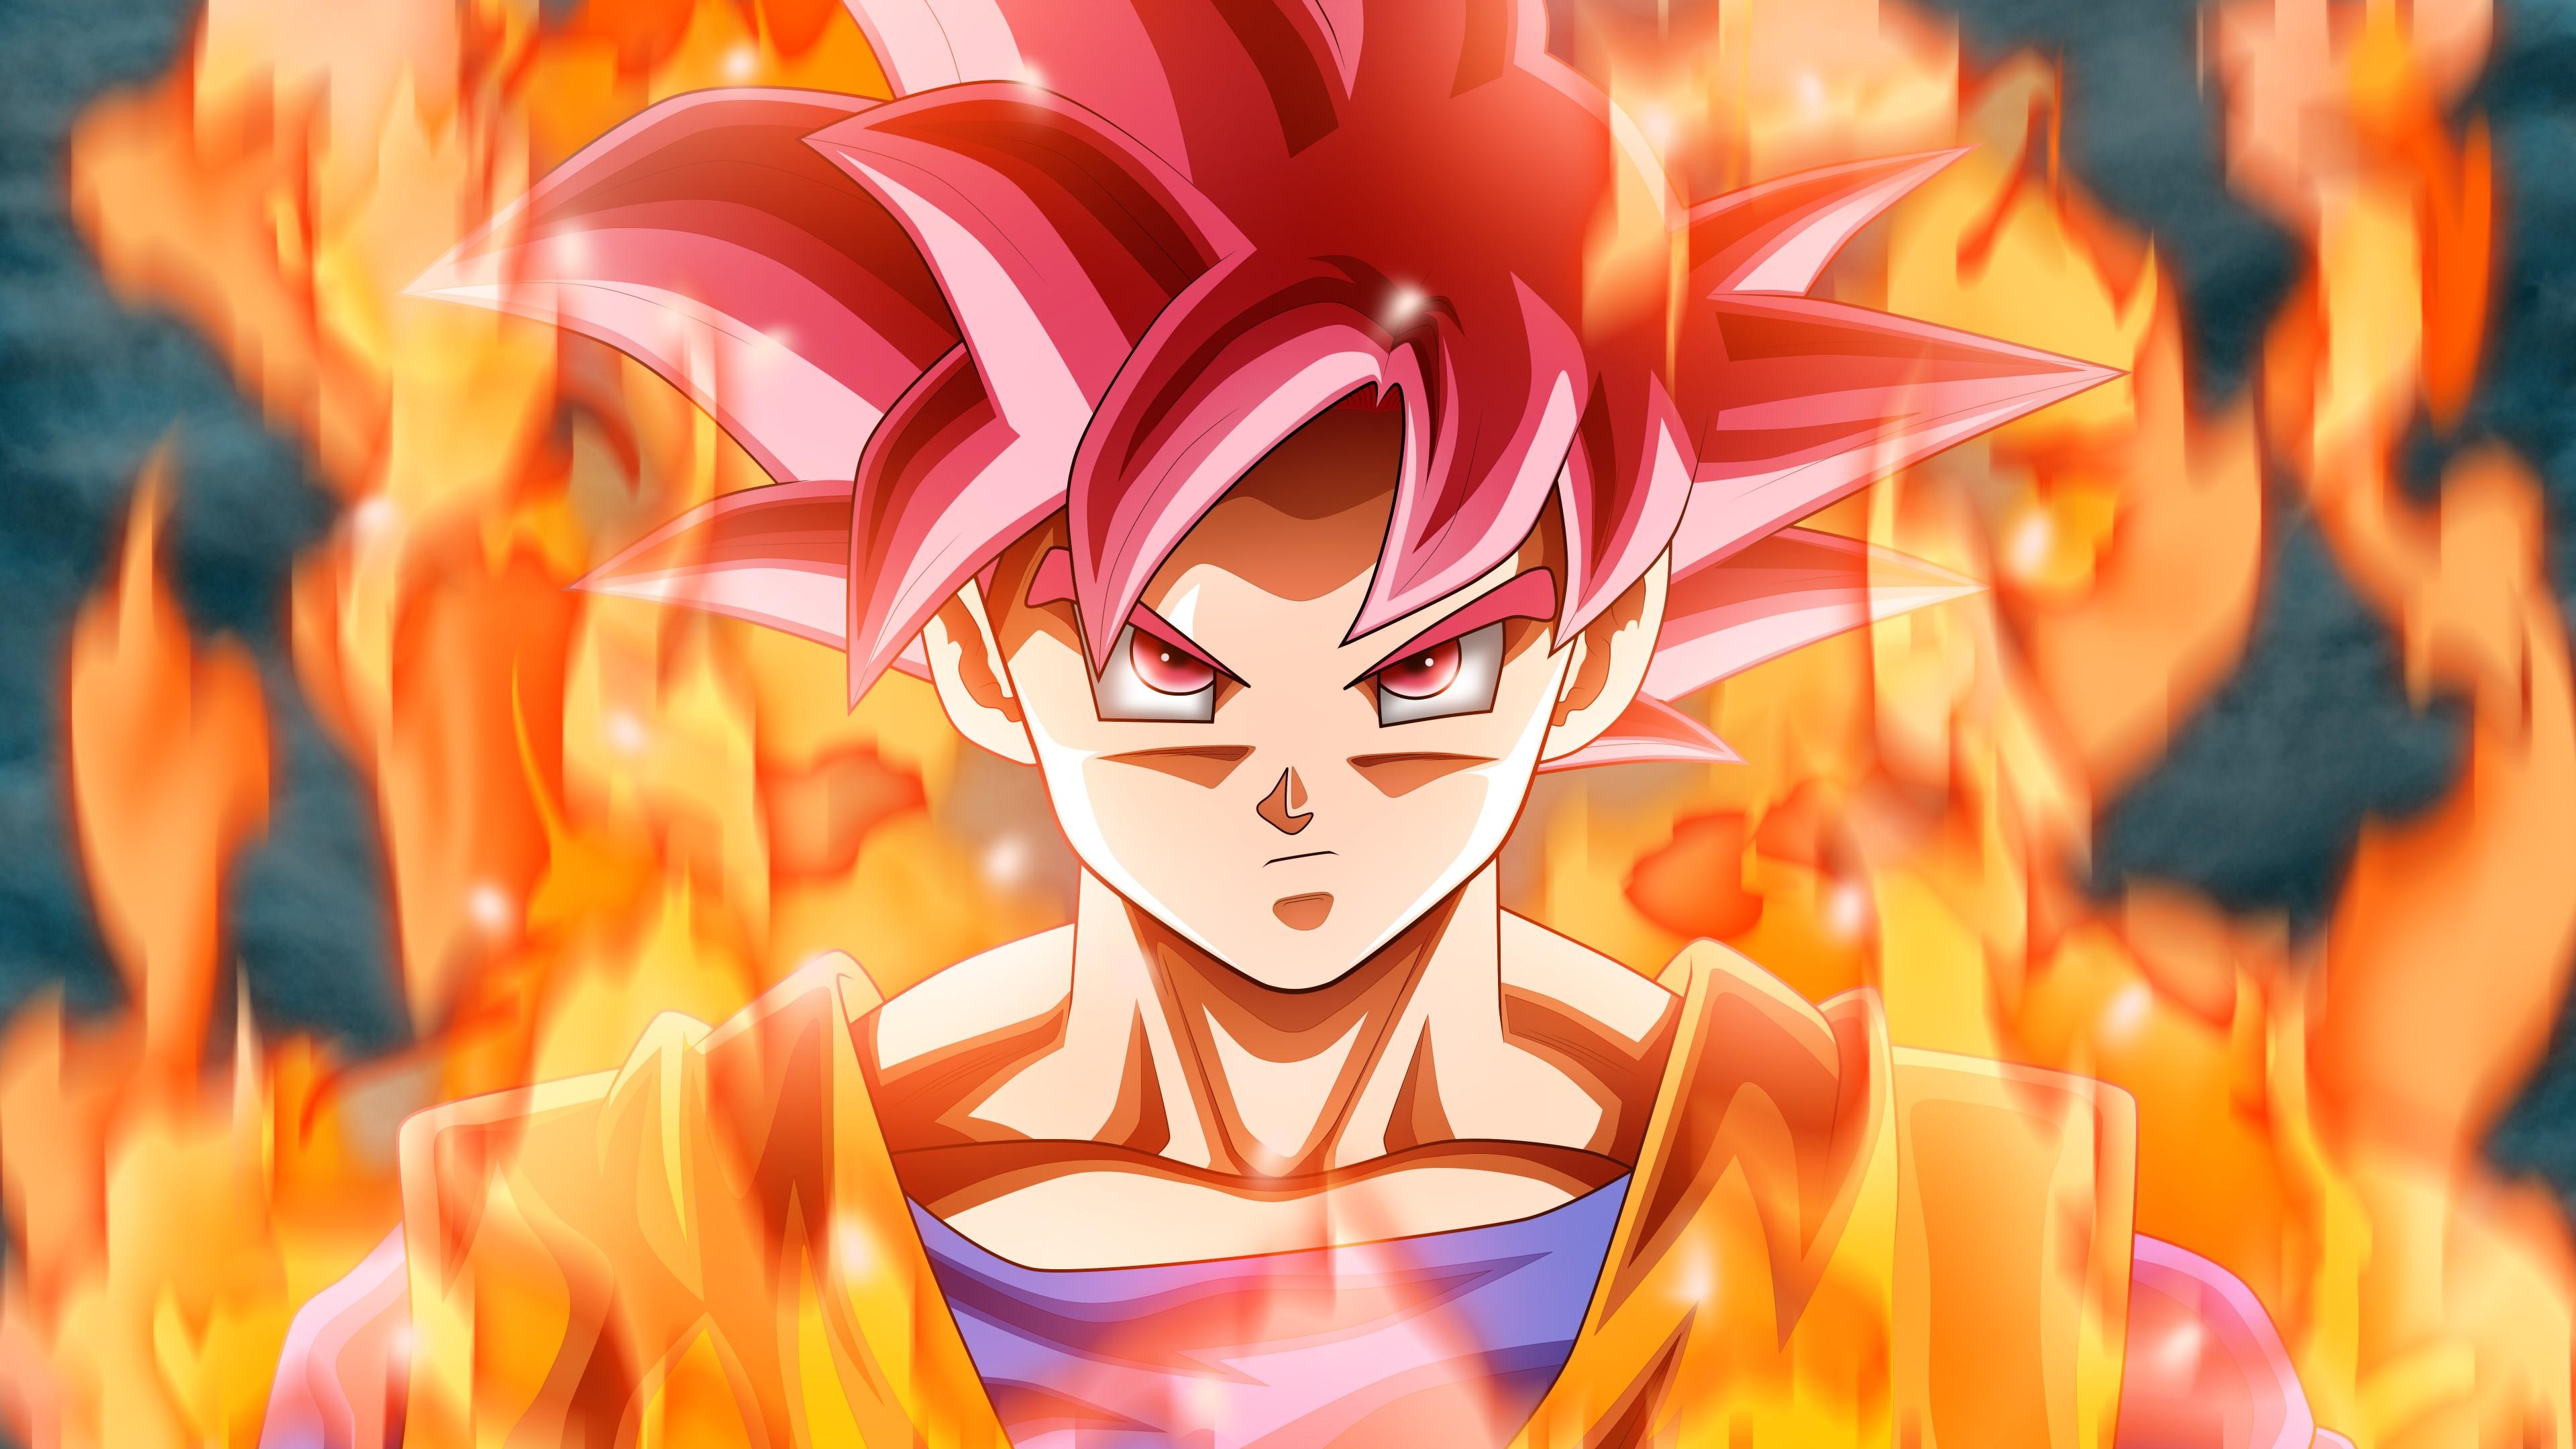 Wallpaper Goku, Dragon Ball Super, 4K, 8K, Anime,. Wallpaper for iPhone, Android, Mobile and Desktop